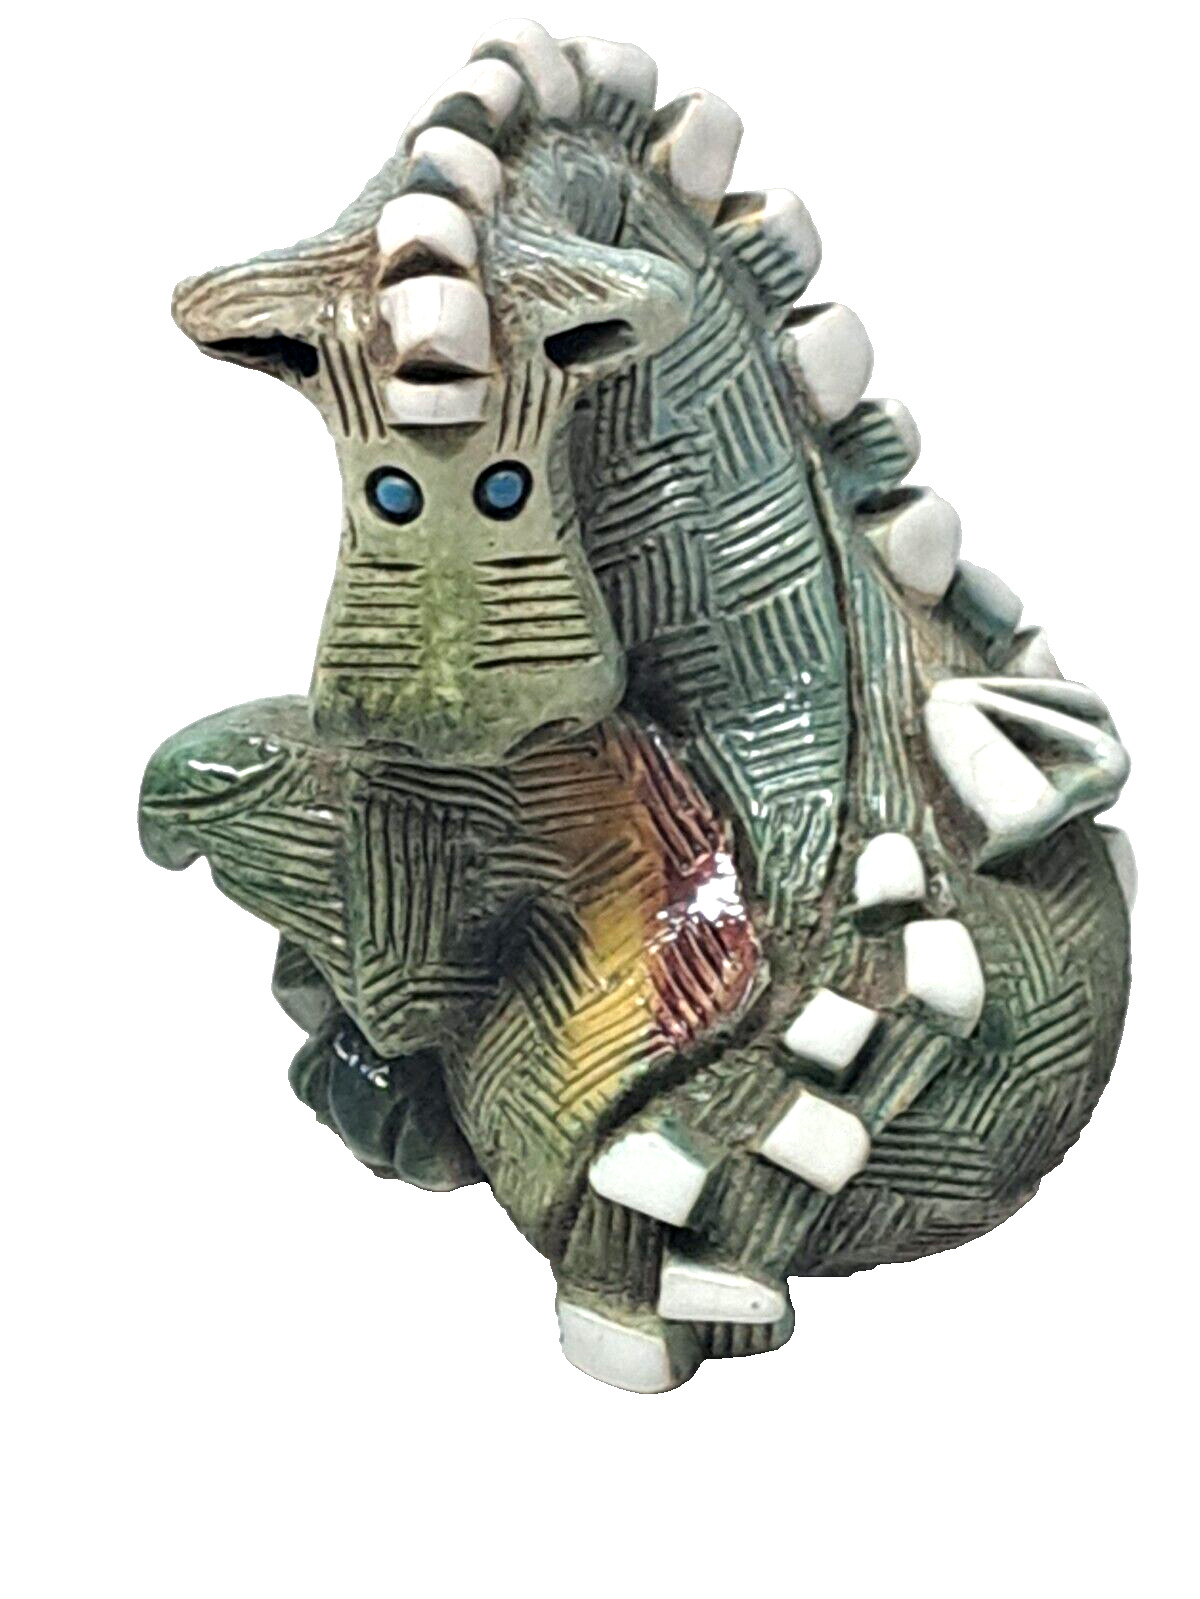 Resin dragon figurine whimsical marked Artesania Rinconada